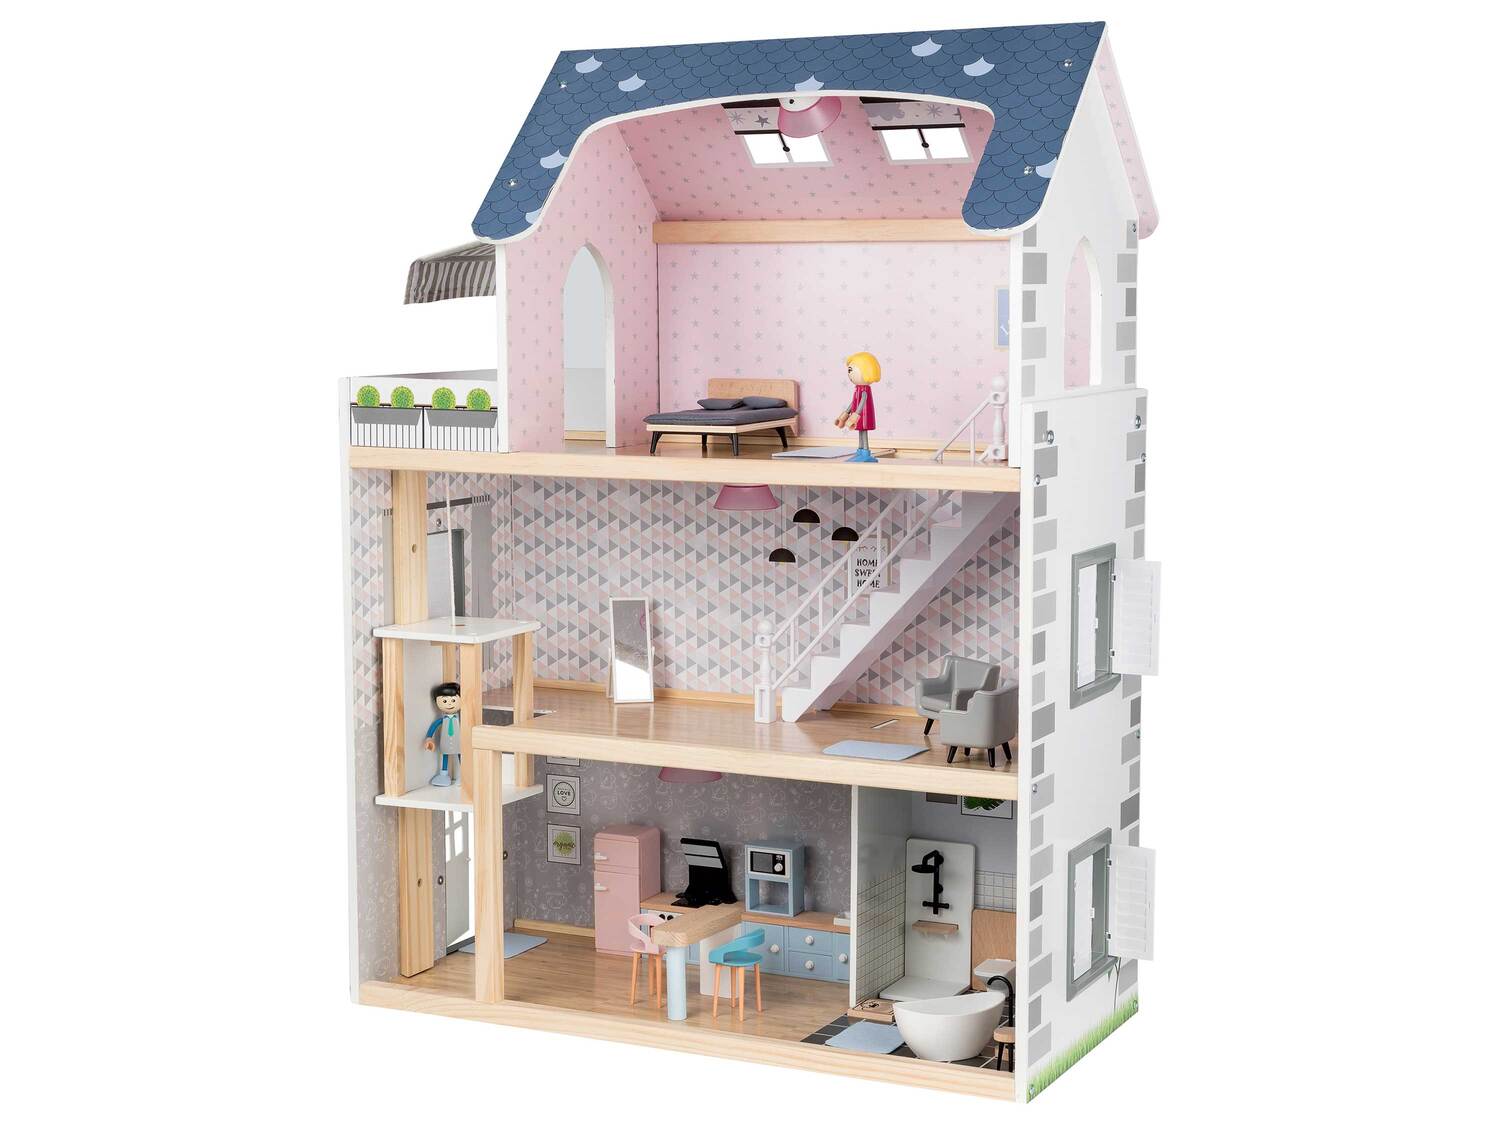 Maison de poupées , le prix 39.99 € 
- Env. 64 x 80 x 31 cm (l x h x p)
- Hauteur ...